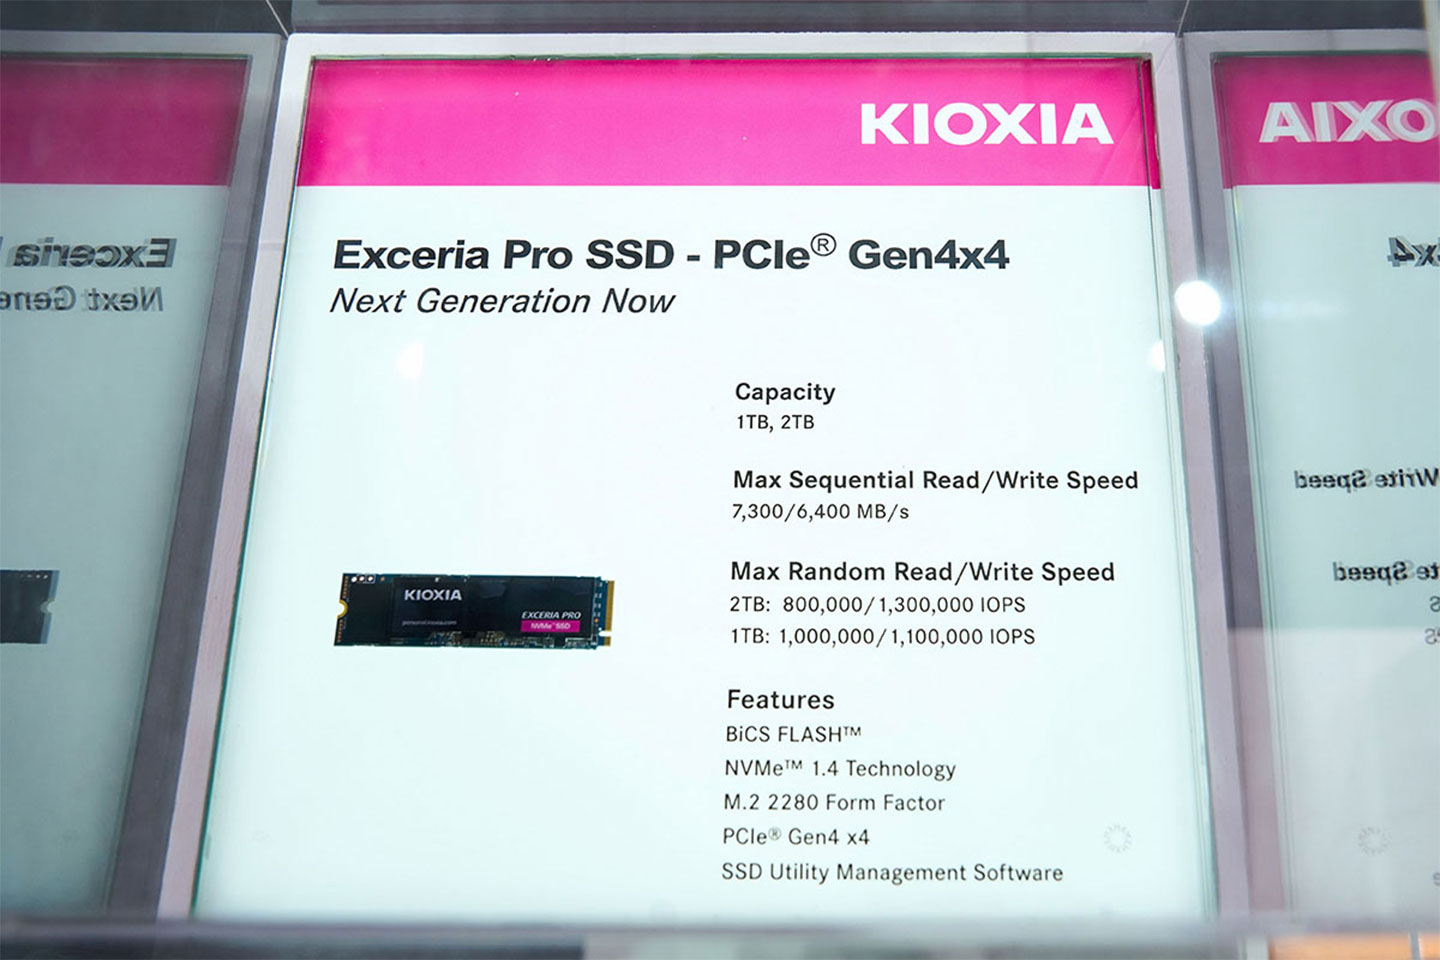  EXCERIA PRO 是主打高效能的 PCIe Gen4 SSD，循序讀取最高可達 7,300 MB/s，循序寫入最高可達 6,400 MB/s，整體效能表現堪稱同級產品數一數二。